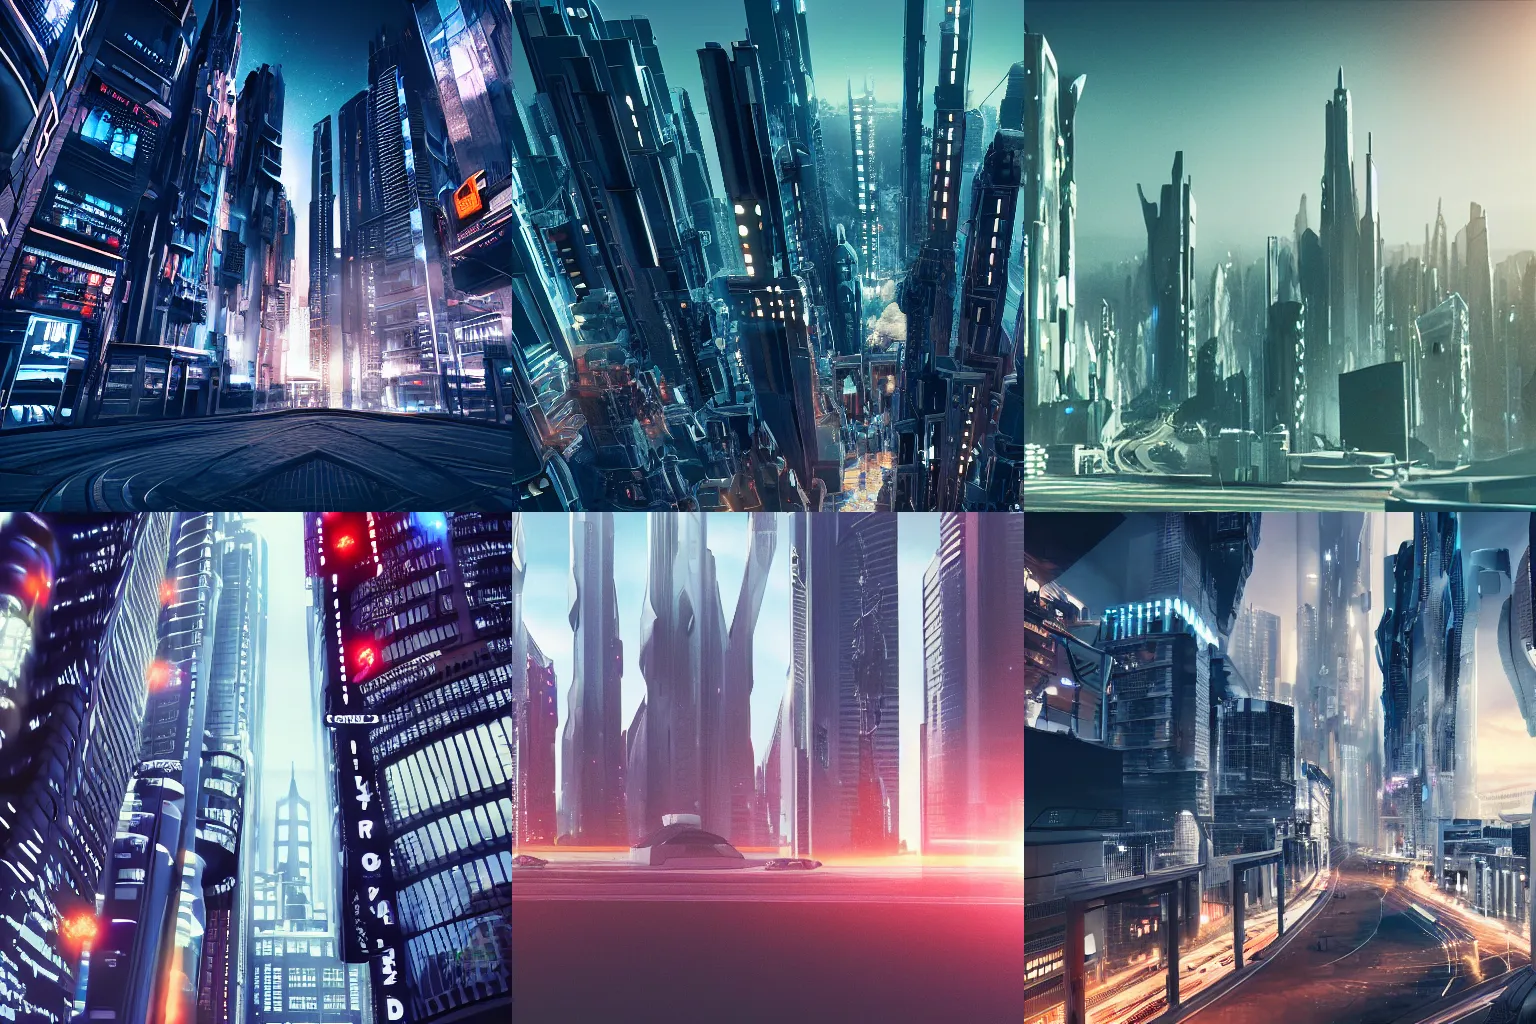 Prompt: cinematic film still of a futuristic city